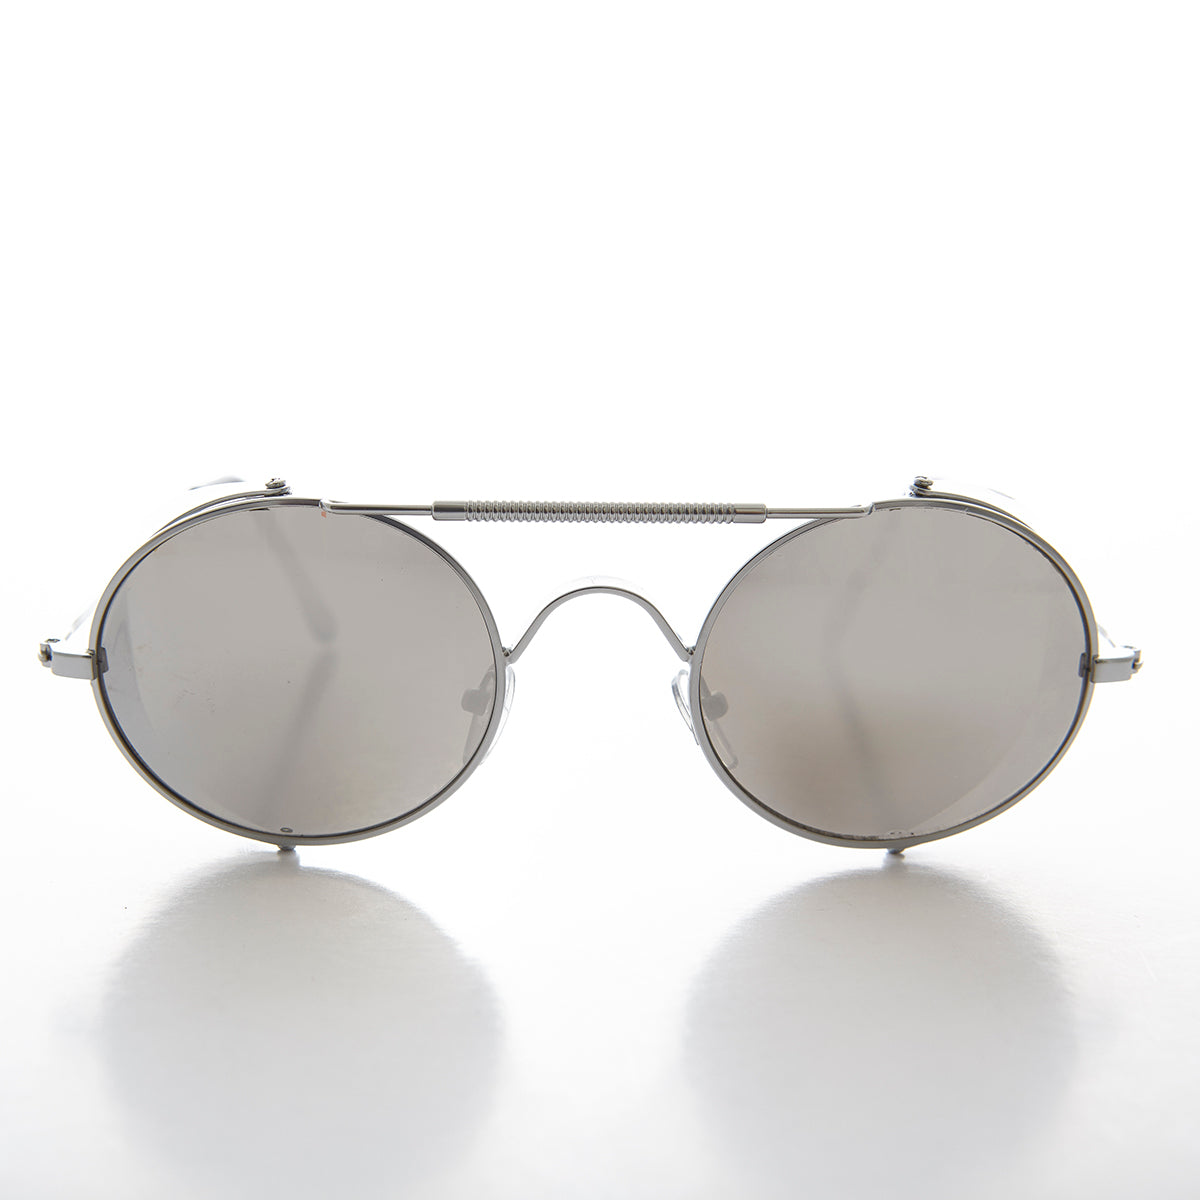 silver oval steampunk sunglasses